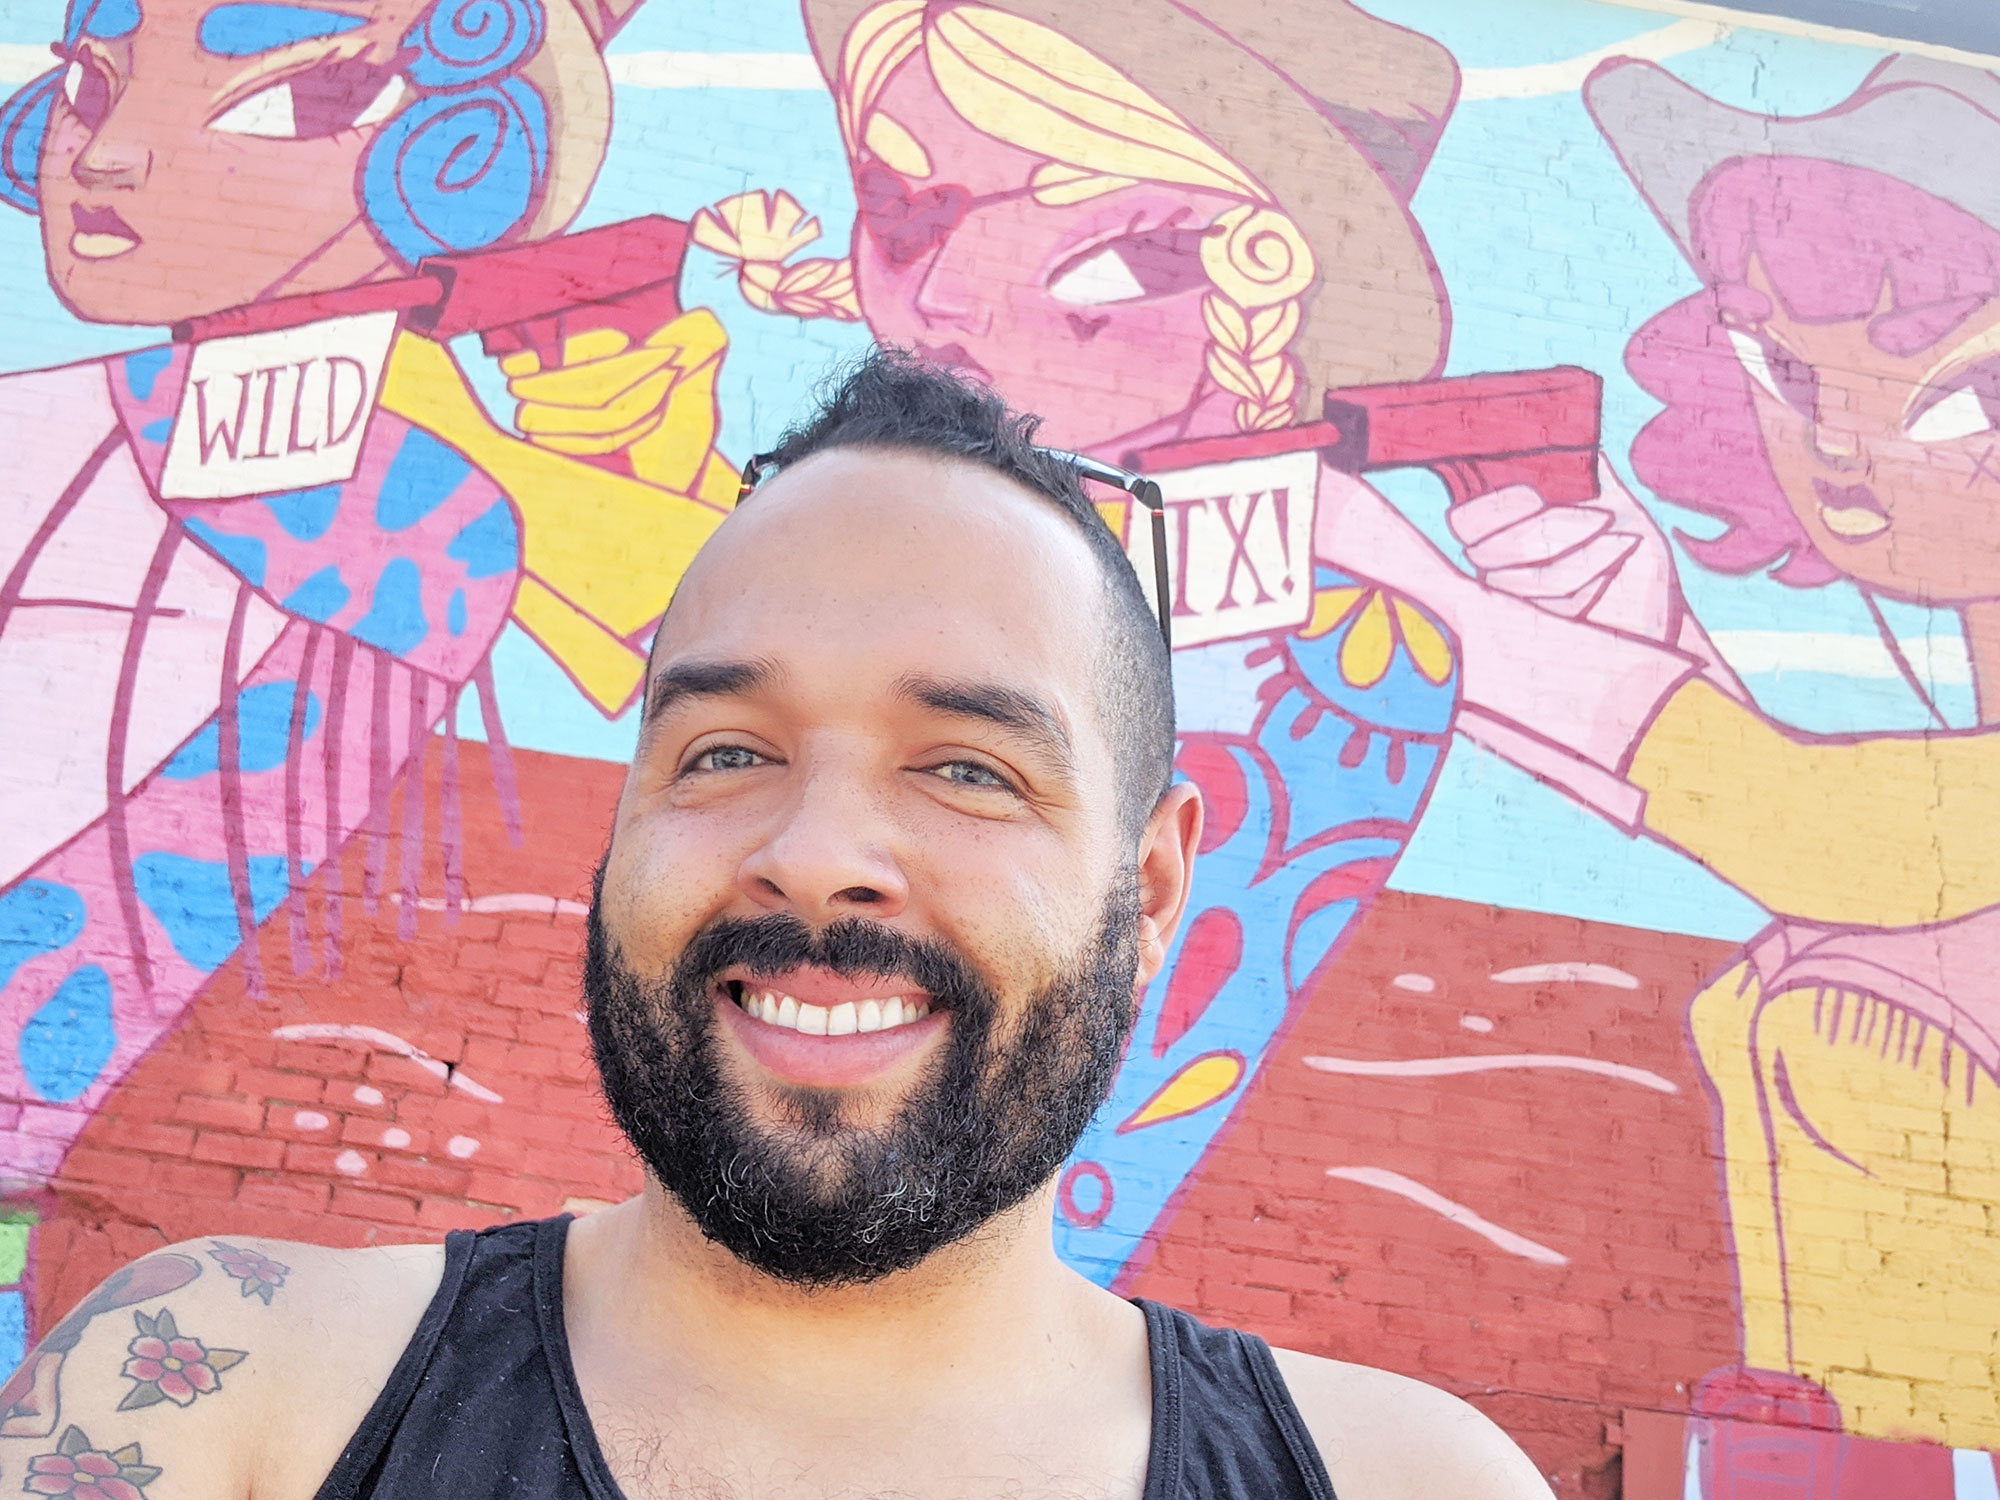 Dennis Jansen posing at a mural in Dallas, Texas.